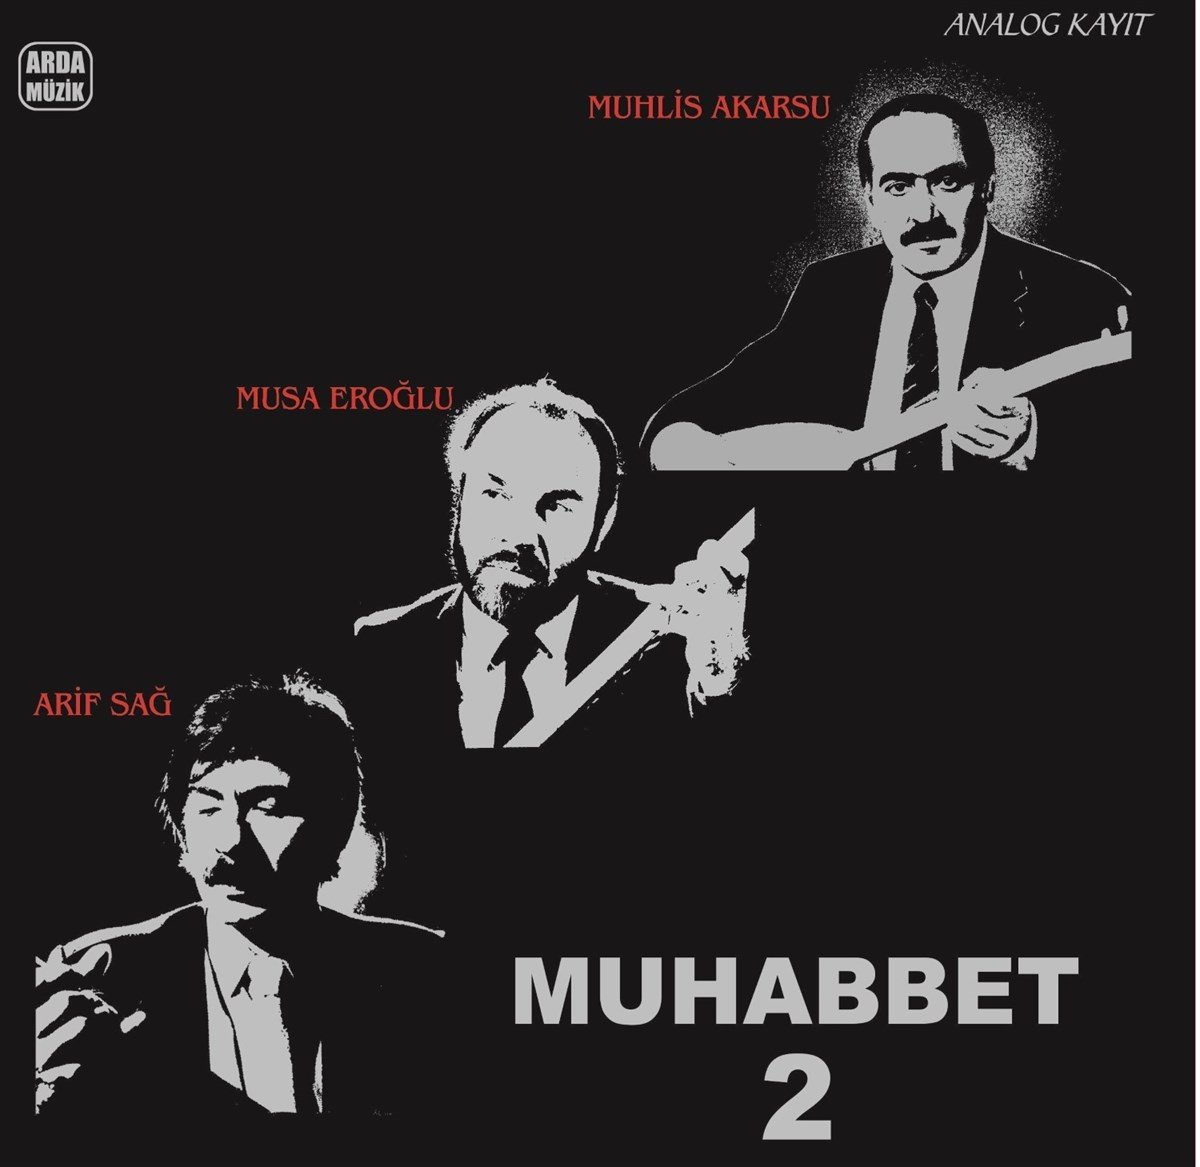 Arif Sağ, Musa Eroğlu, Muhlis Akarsu - Muhabbet 2